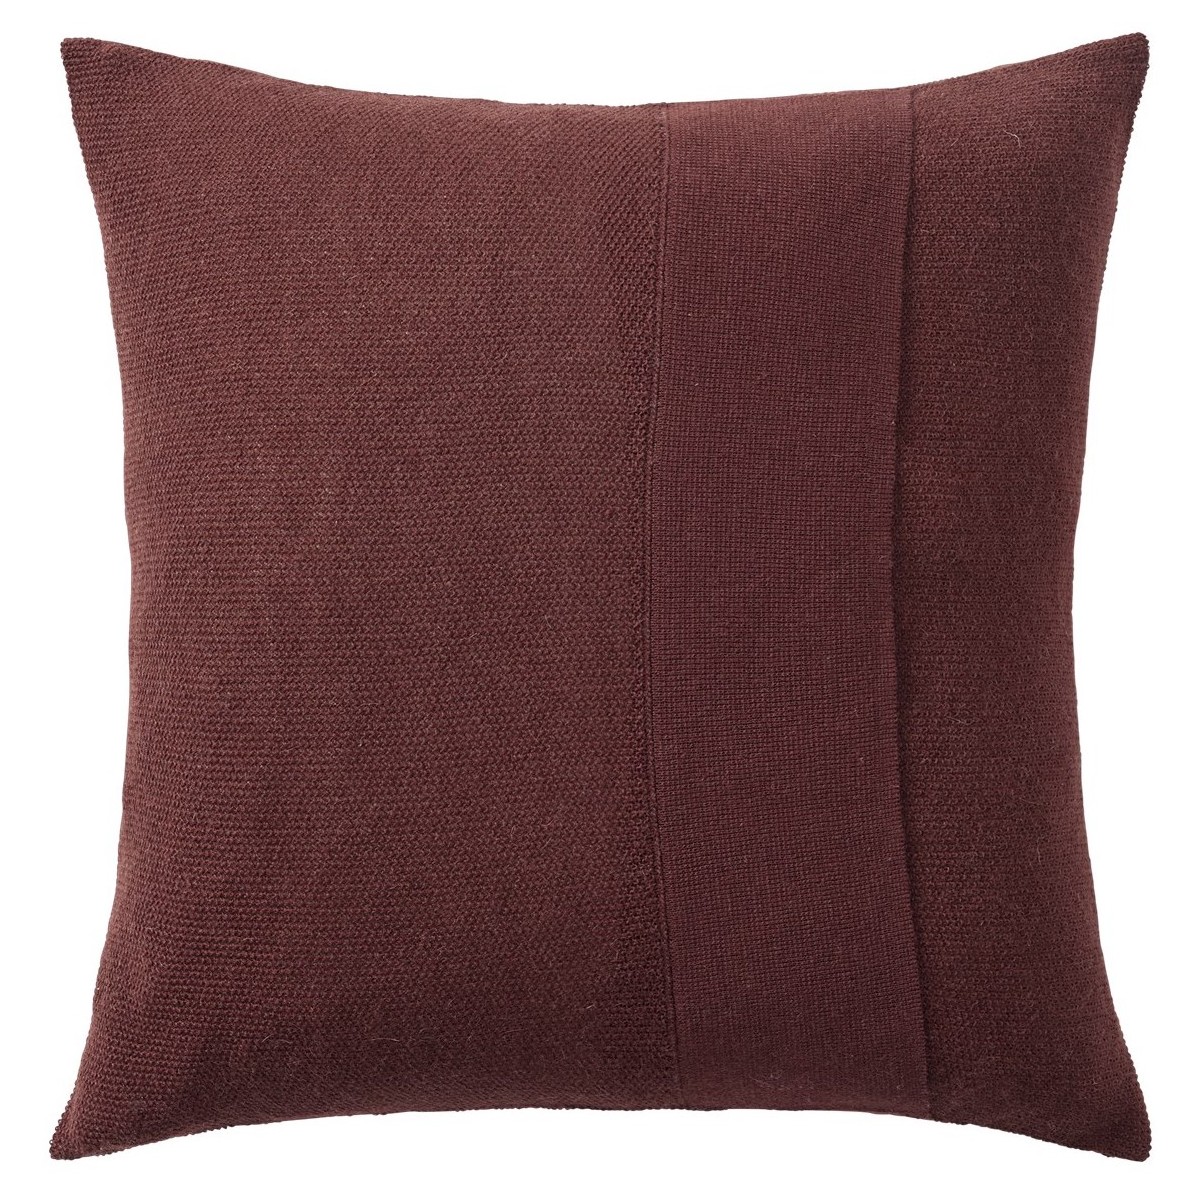 Layer cushion - 50 x 50 cm - burgundy